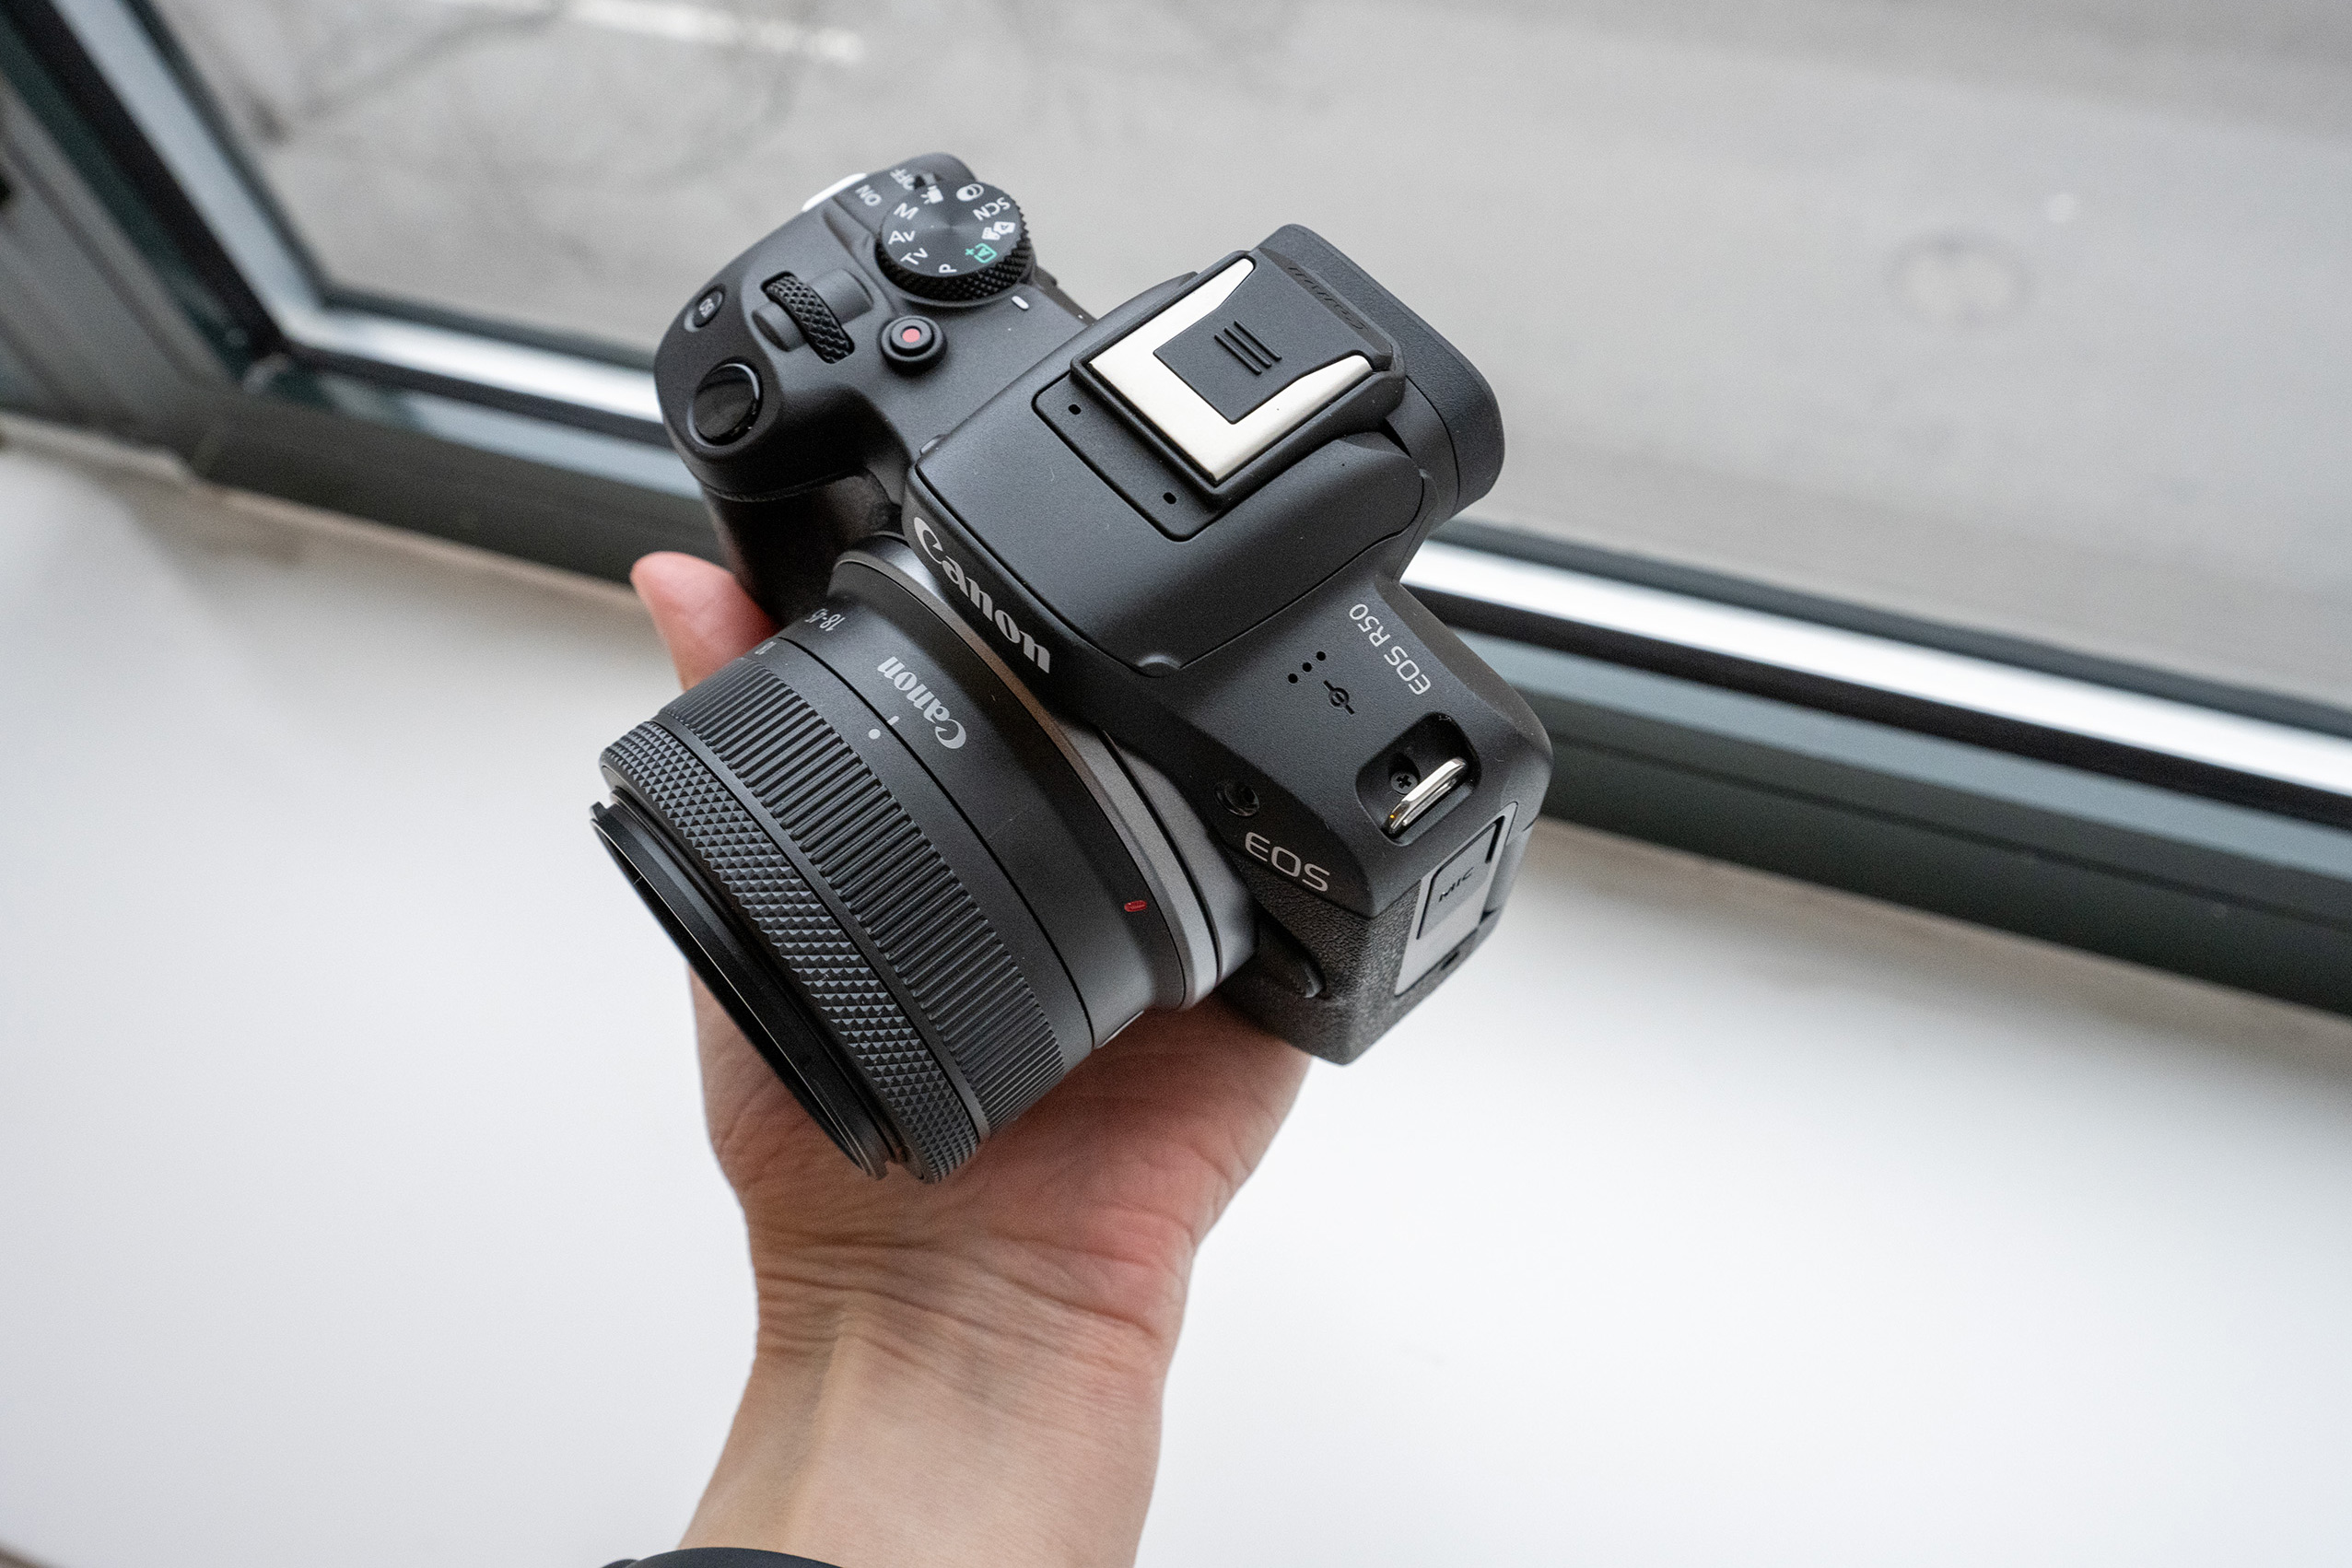 Canon EOS M50 Review - BEST MIRRORLESS CANON SO FAR! 